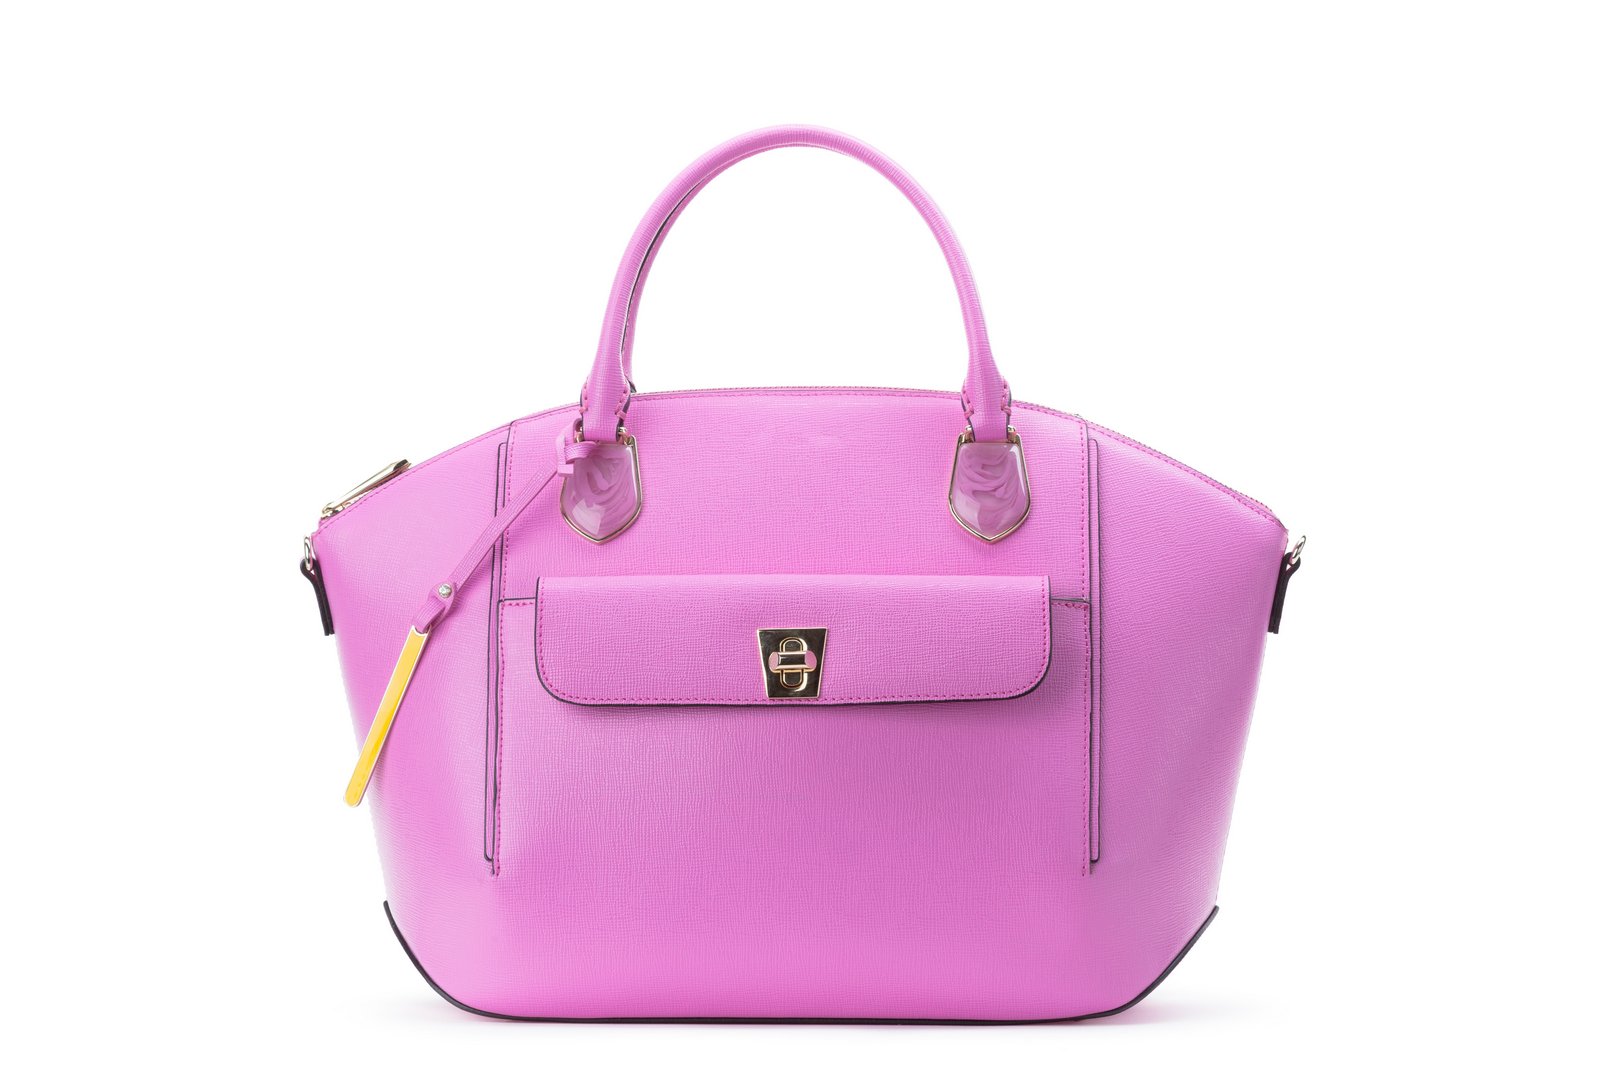 Pink designer handbag - real or fake purse